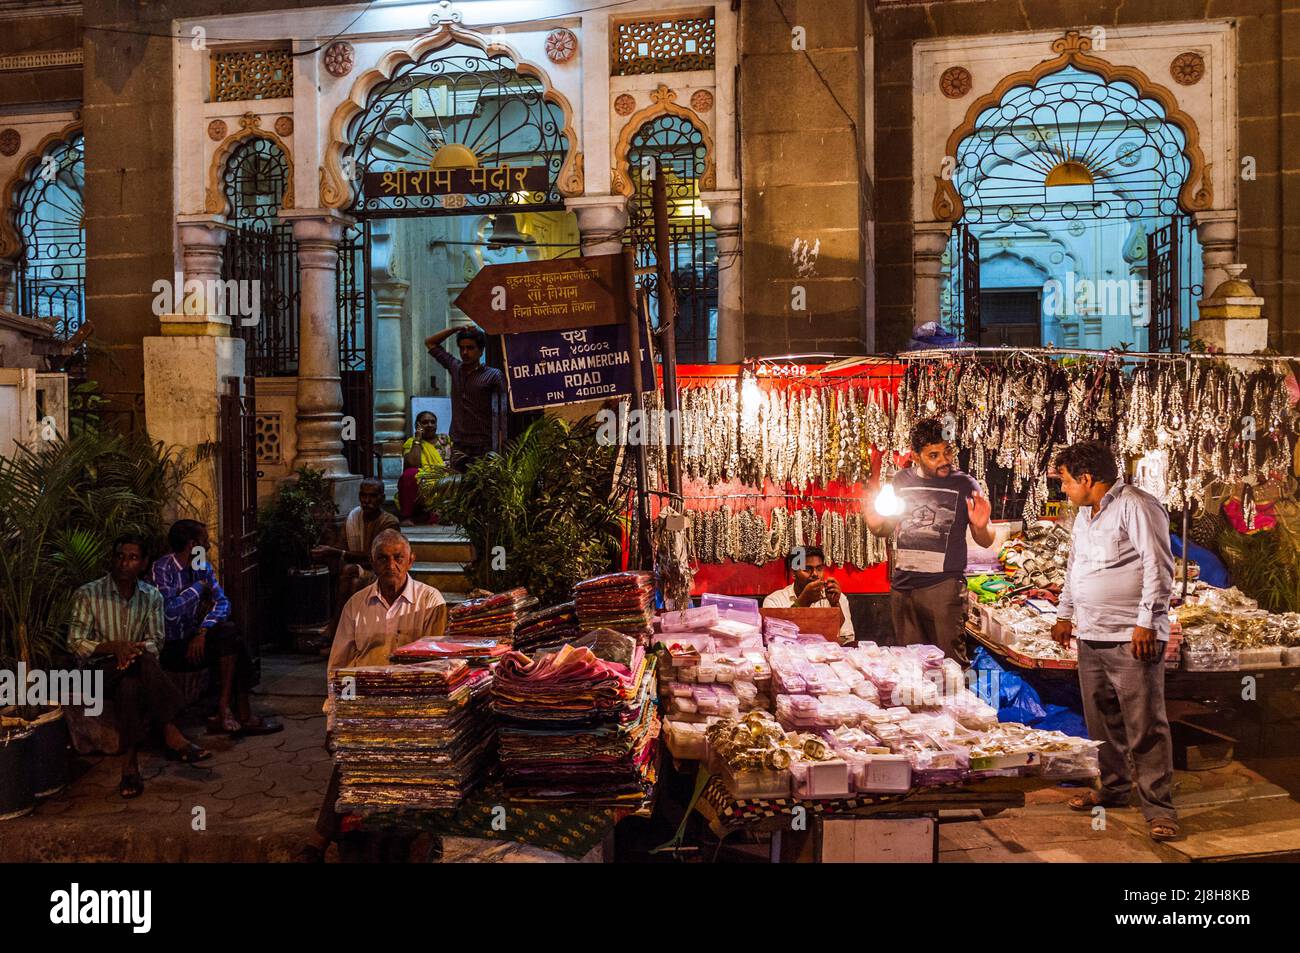 Mumbai, Maharashtra, India : People shop at night in the busy Mangaldas market in the Kalbadevi neighborhood. Stock Photo